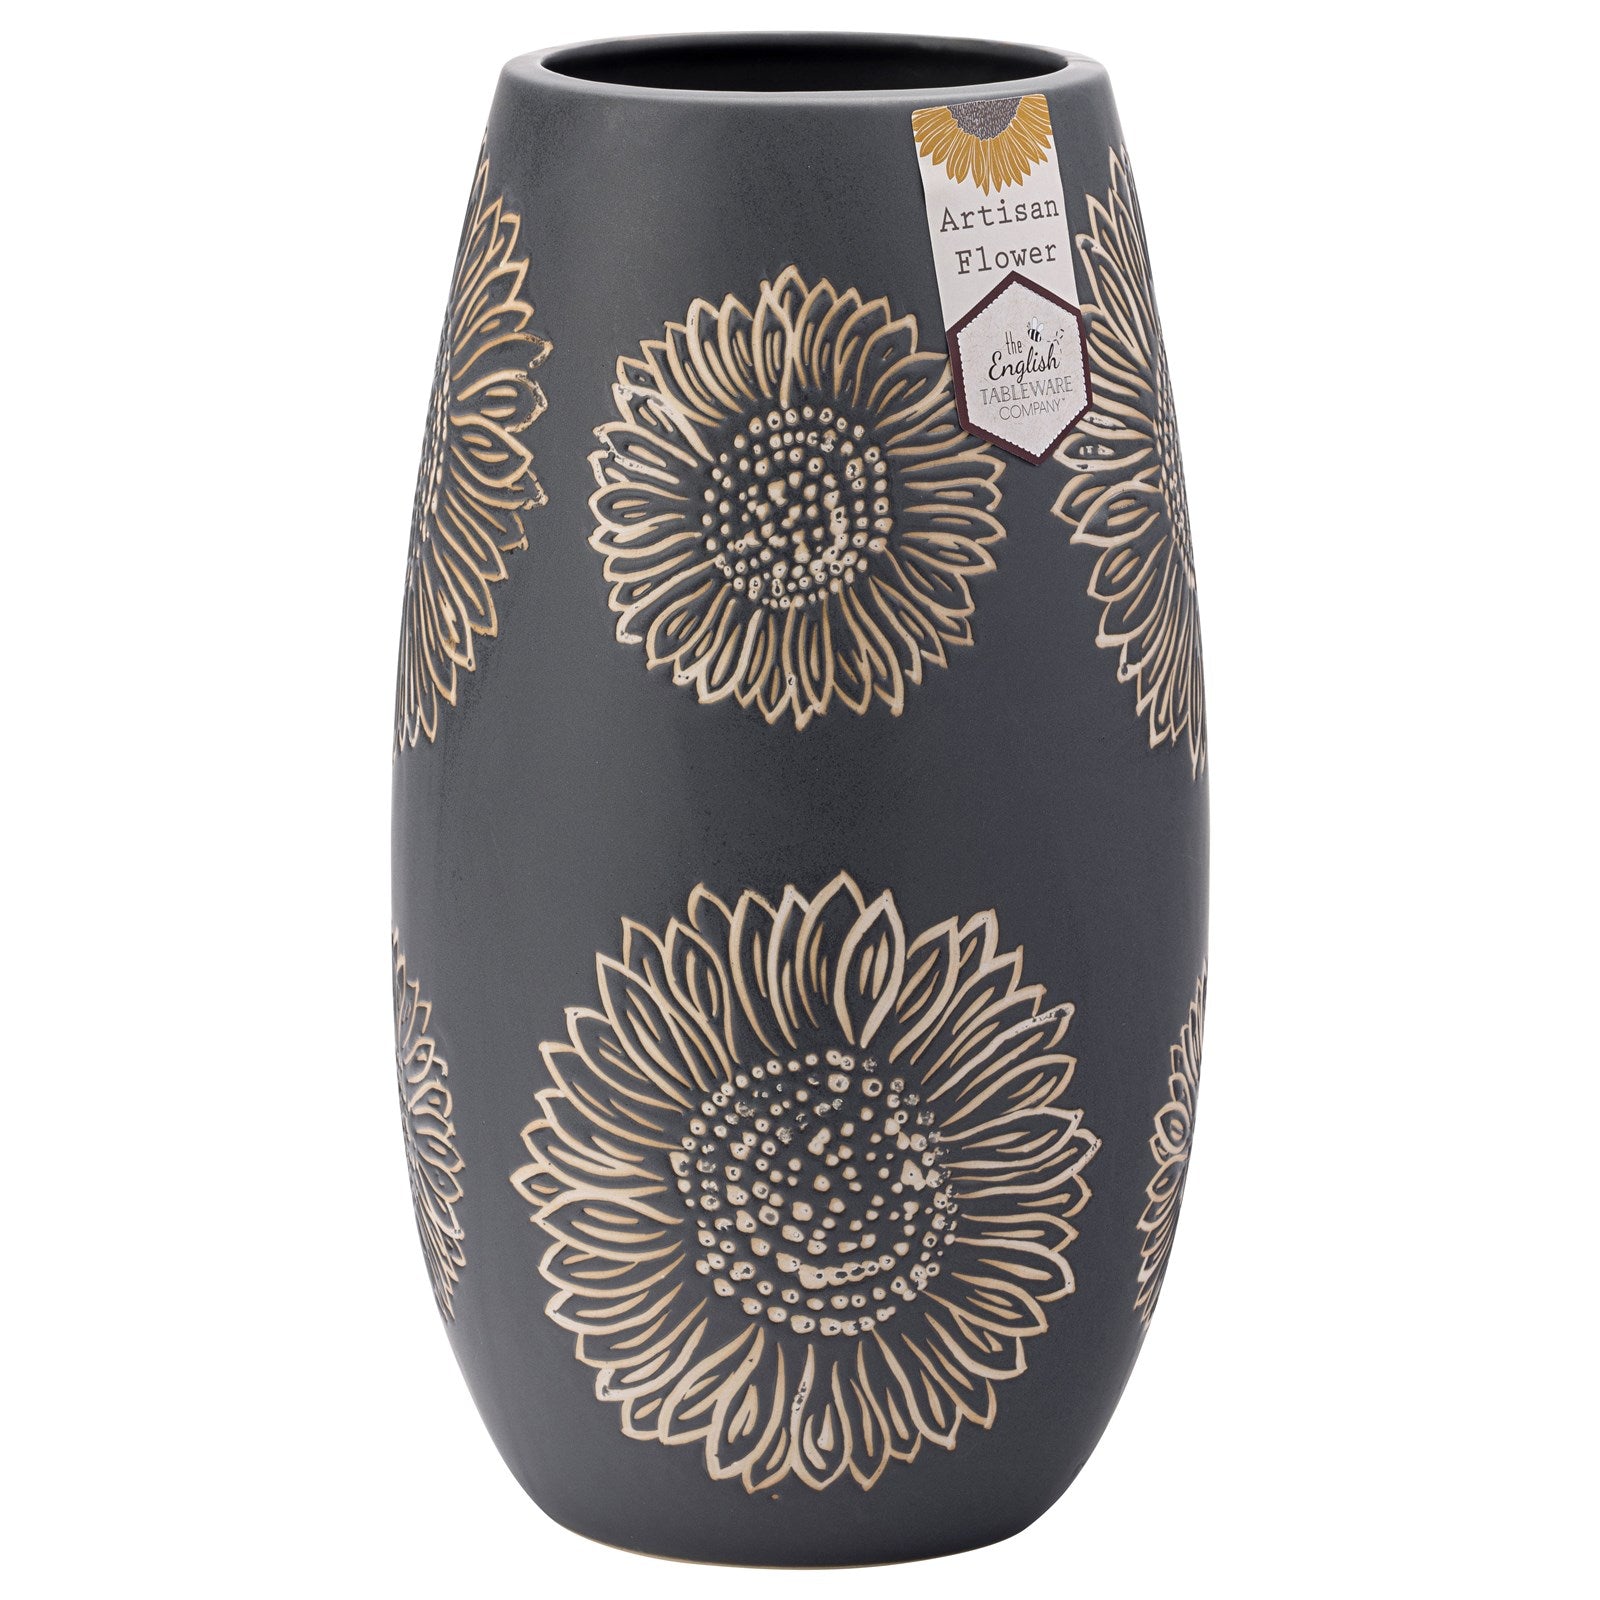 The English Tableware Company Artisan Flower Wax Resist Vase